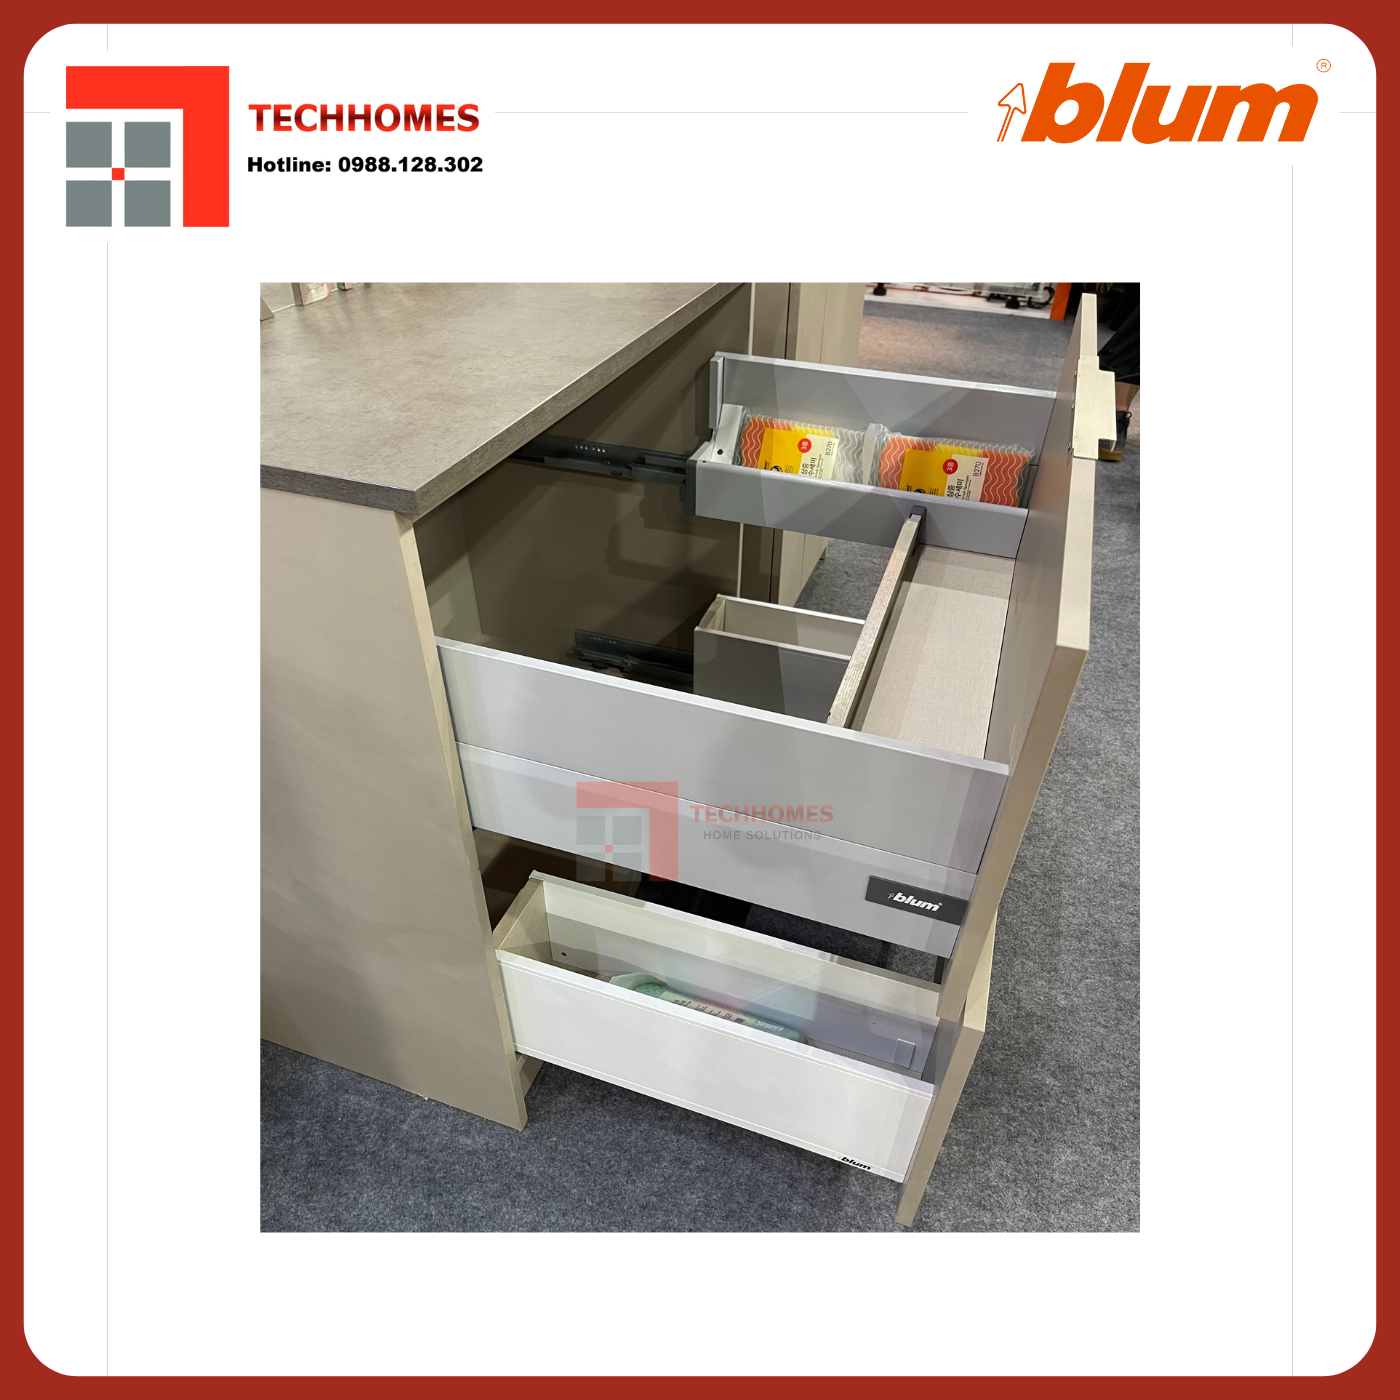 SERVO-DRIVE Blum cho Sink drawer 5755259